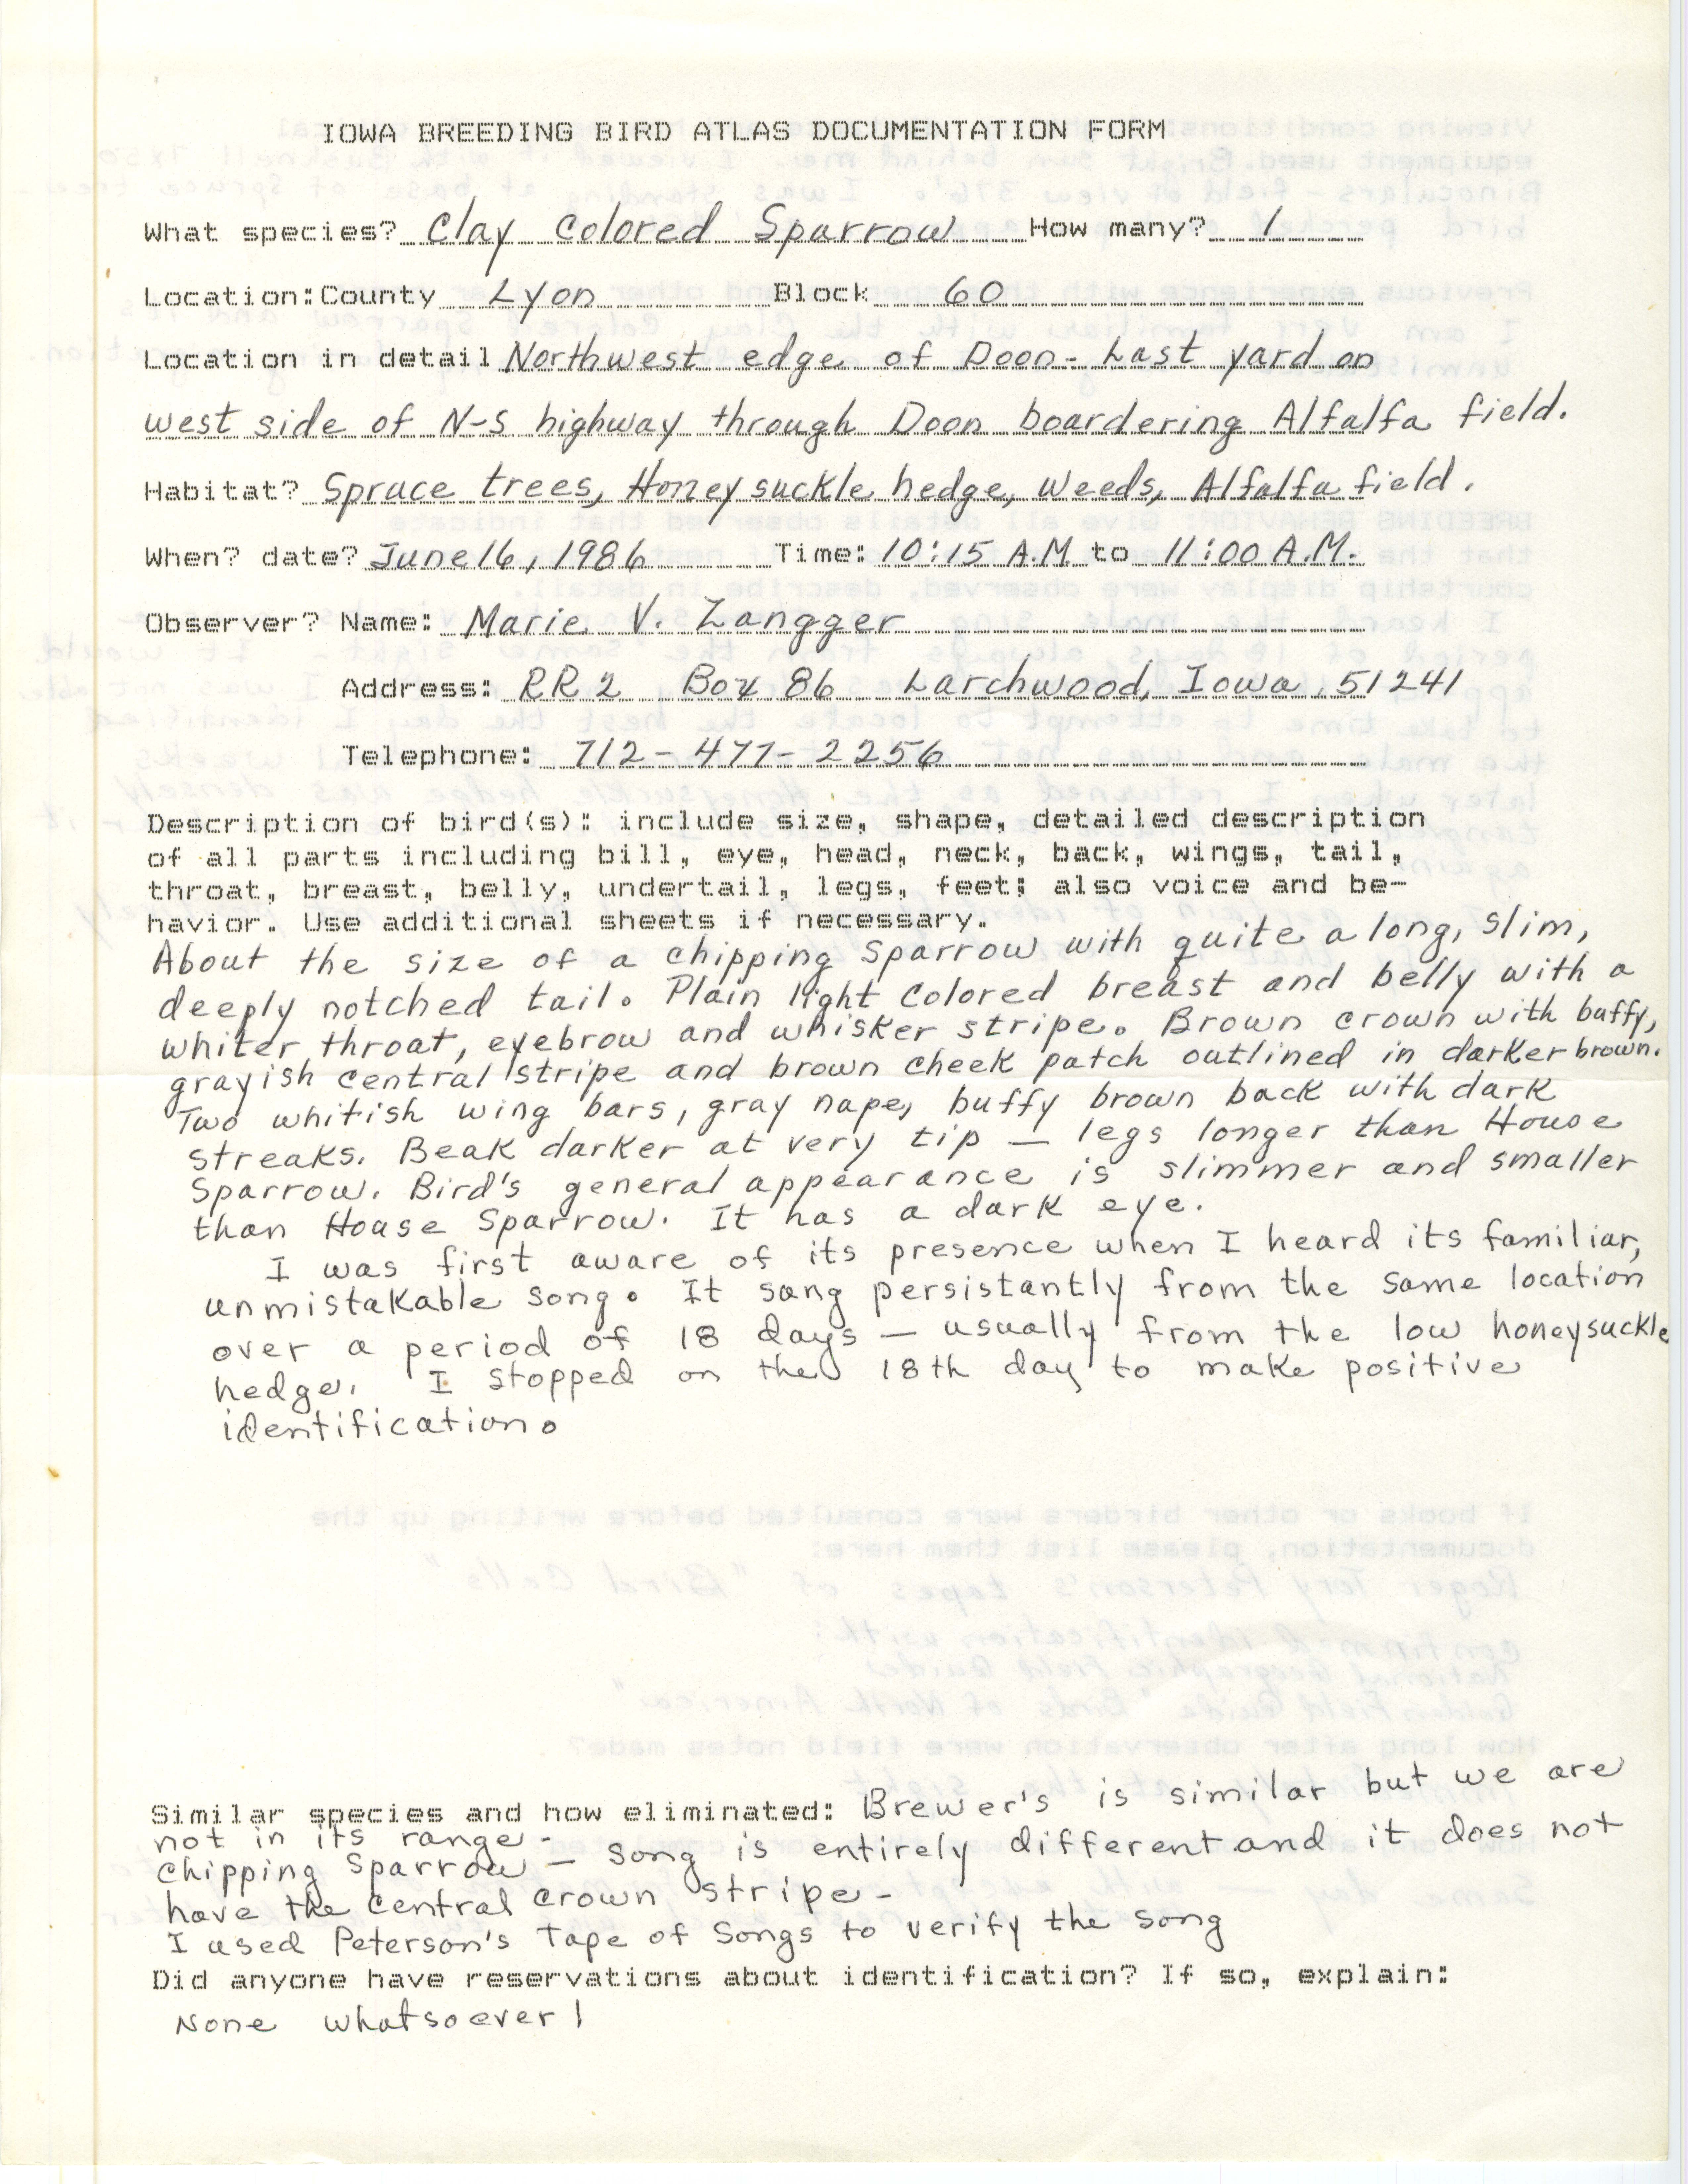 Iowa Breeding Bird Atlas documentation form, Dolly Zangger, June 16, 1986